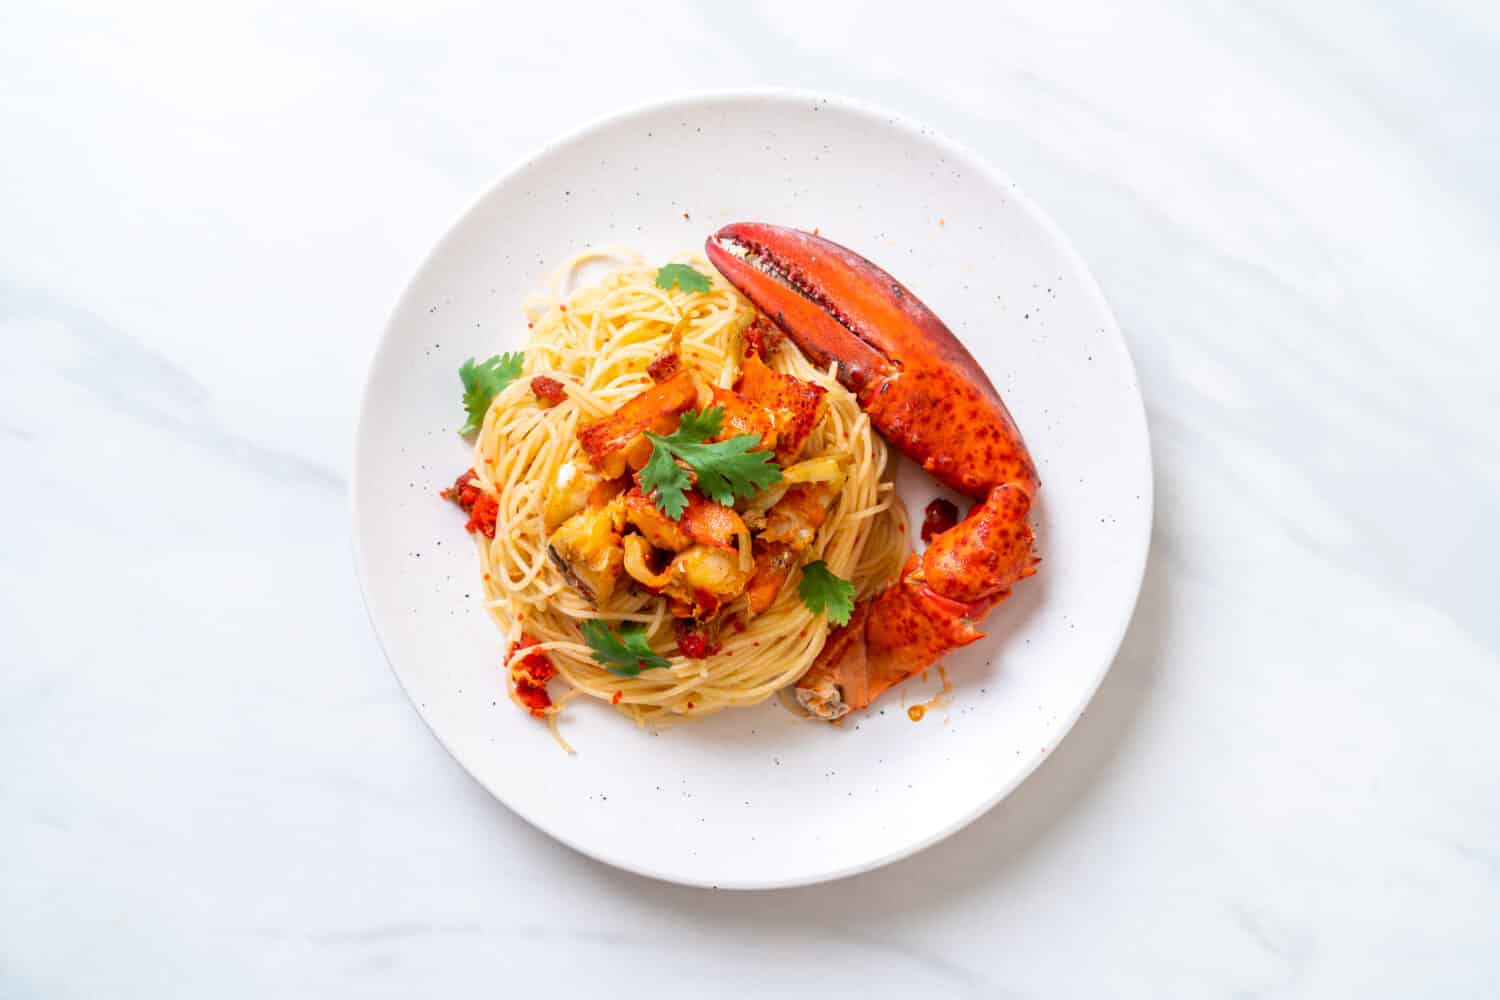 Pasta all'astice or Lobster spaghetti - Italian food